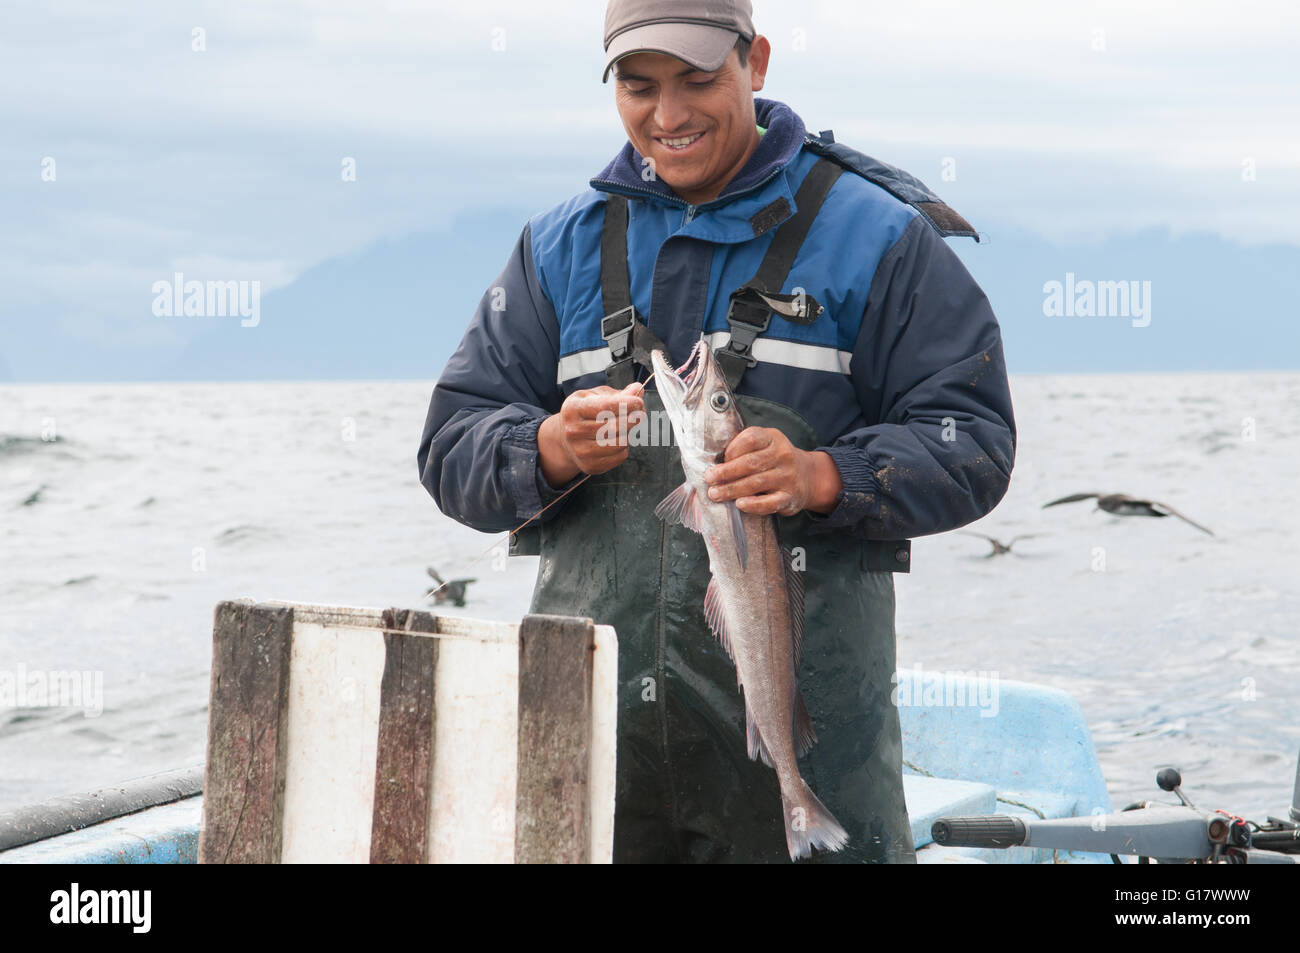 Line fishing for Sierra (Scomberomorus sierra) Stock Photo